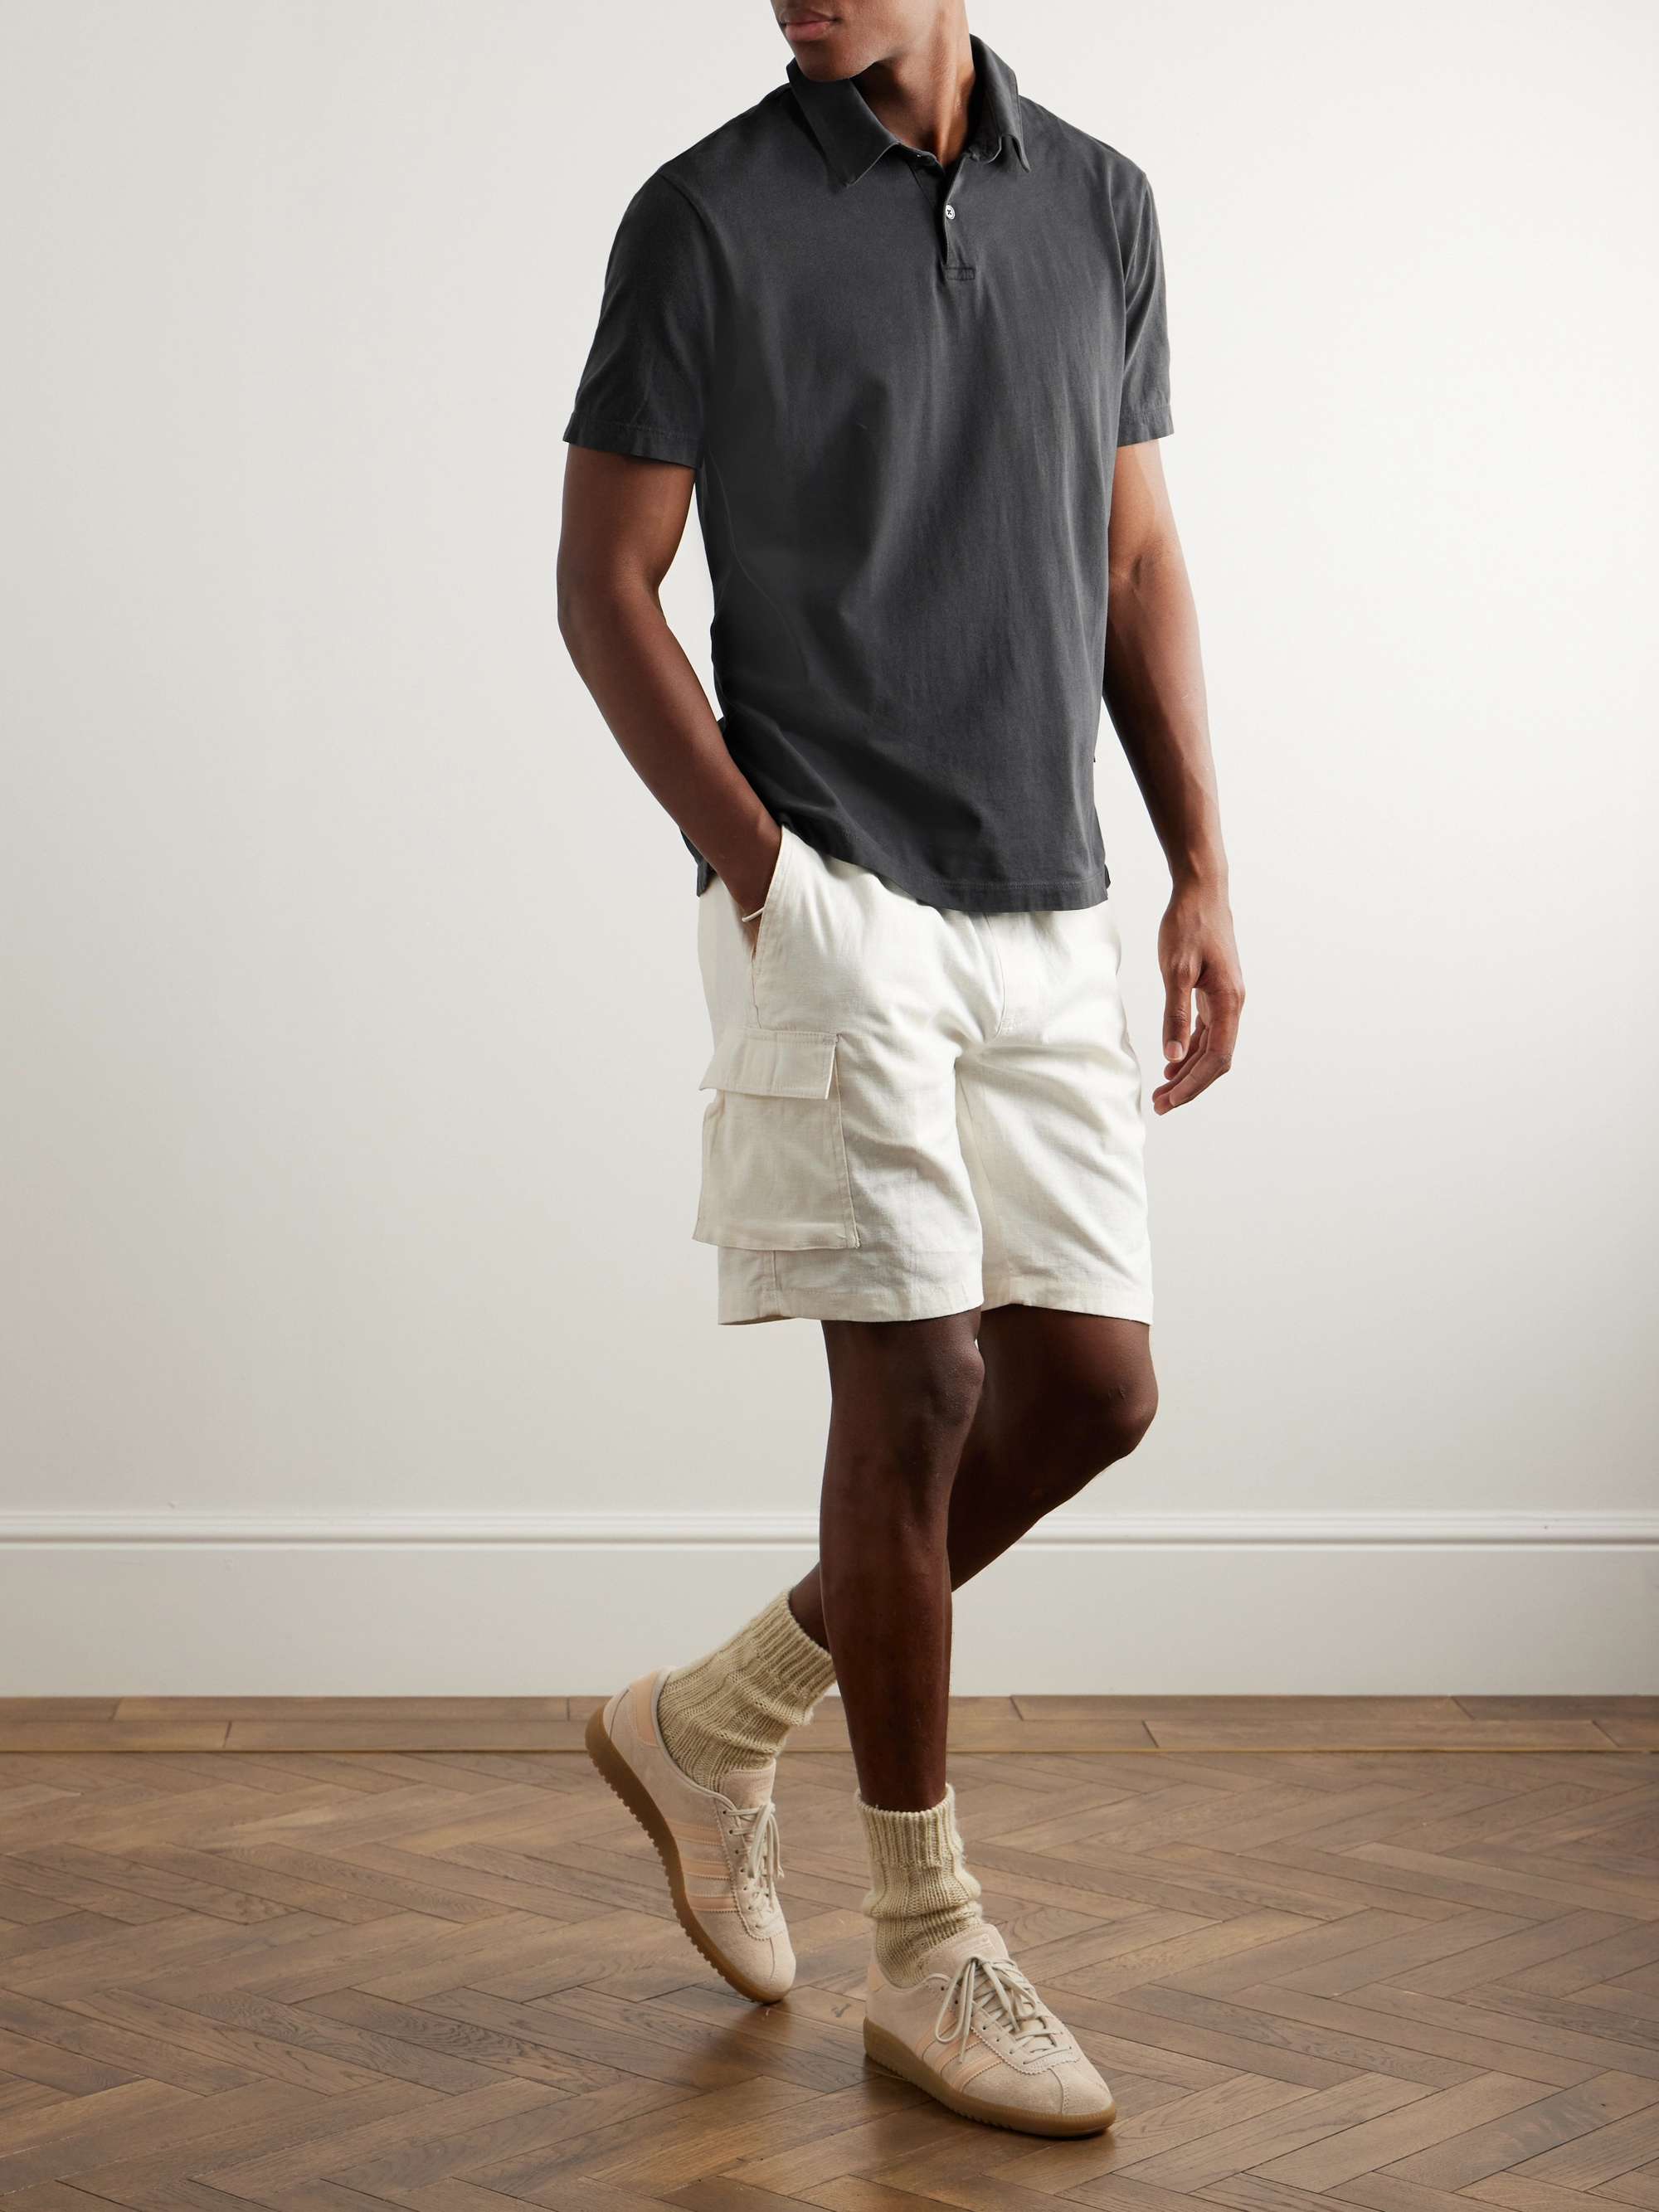 JAMES PERSE Slim-Fit Supima Cotton Polo Shirt | MR PORTER